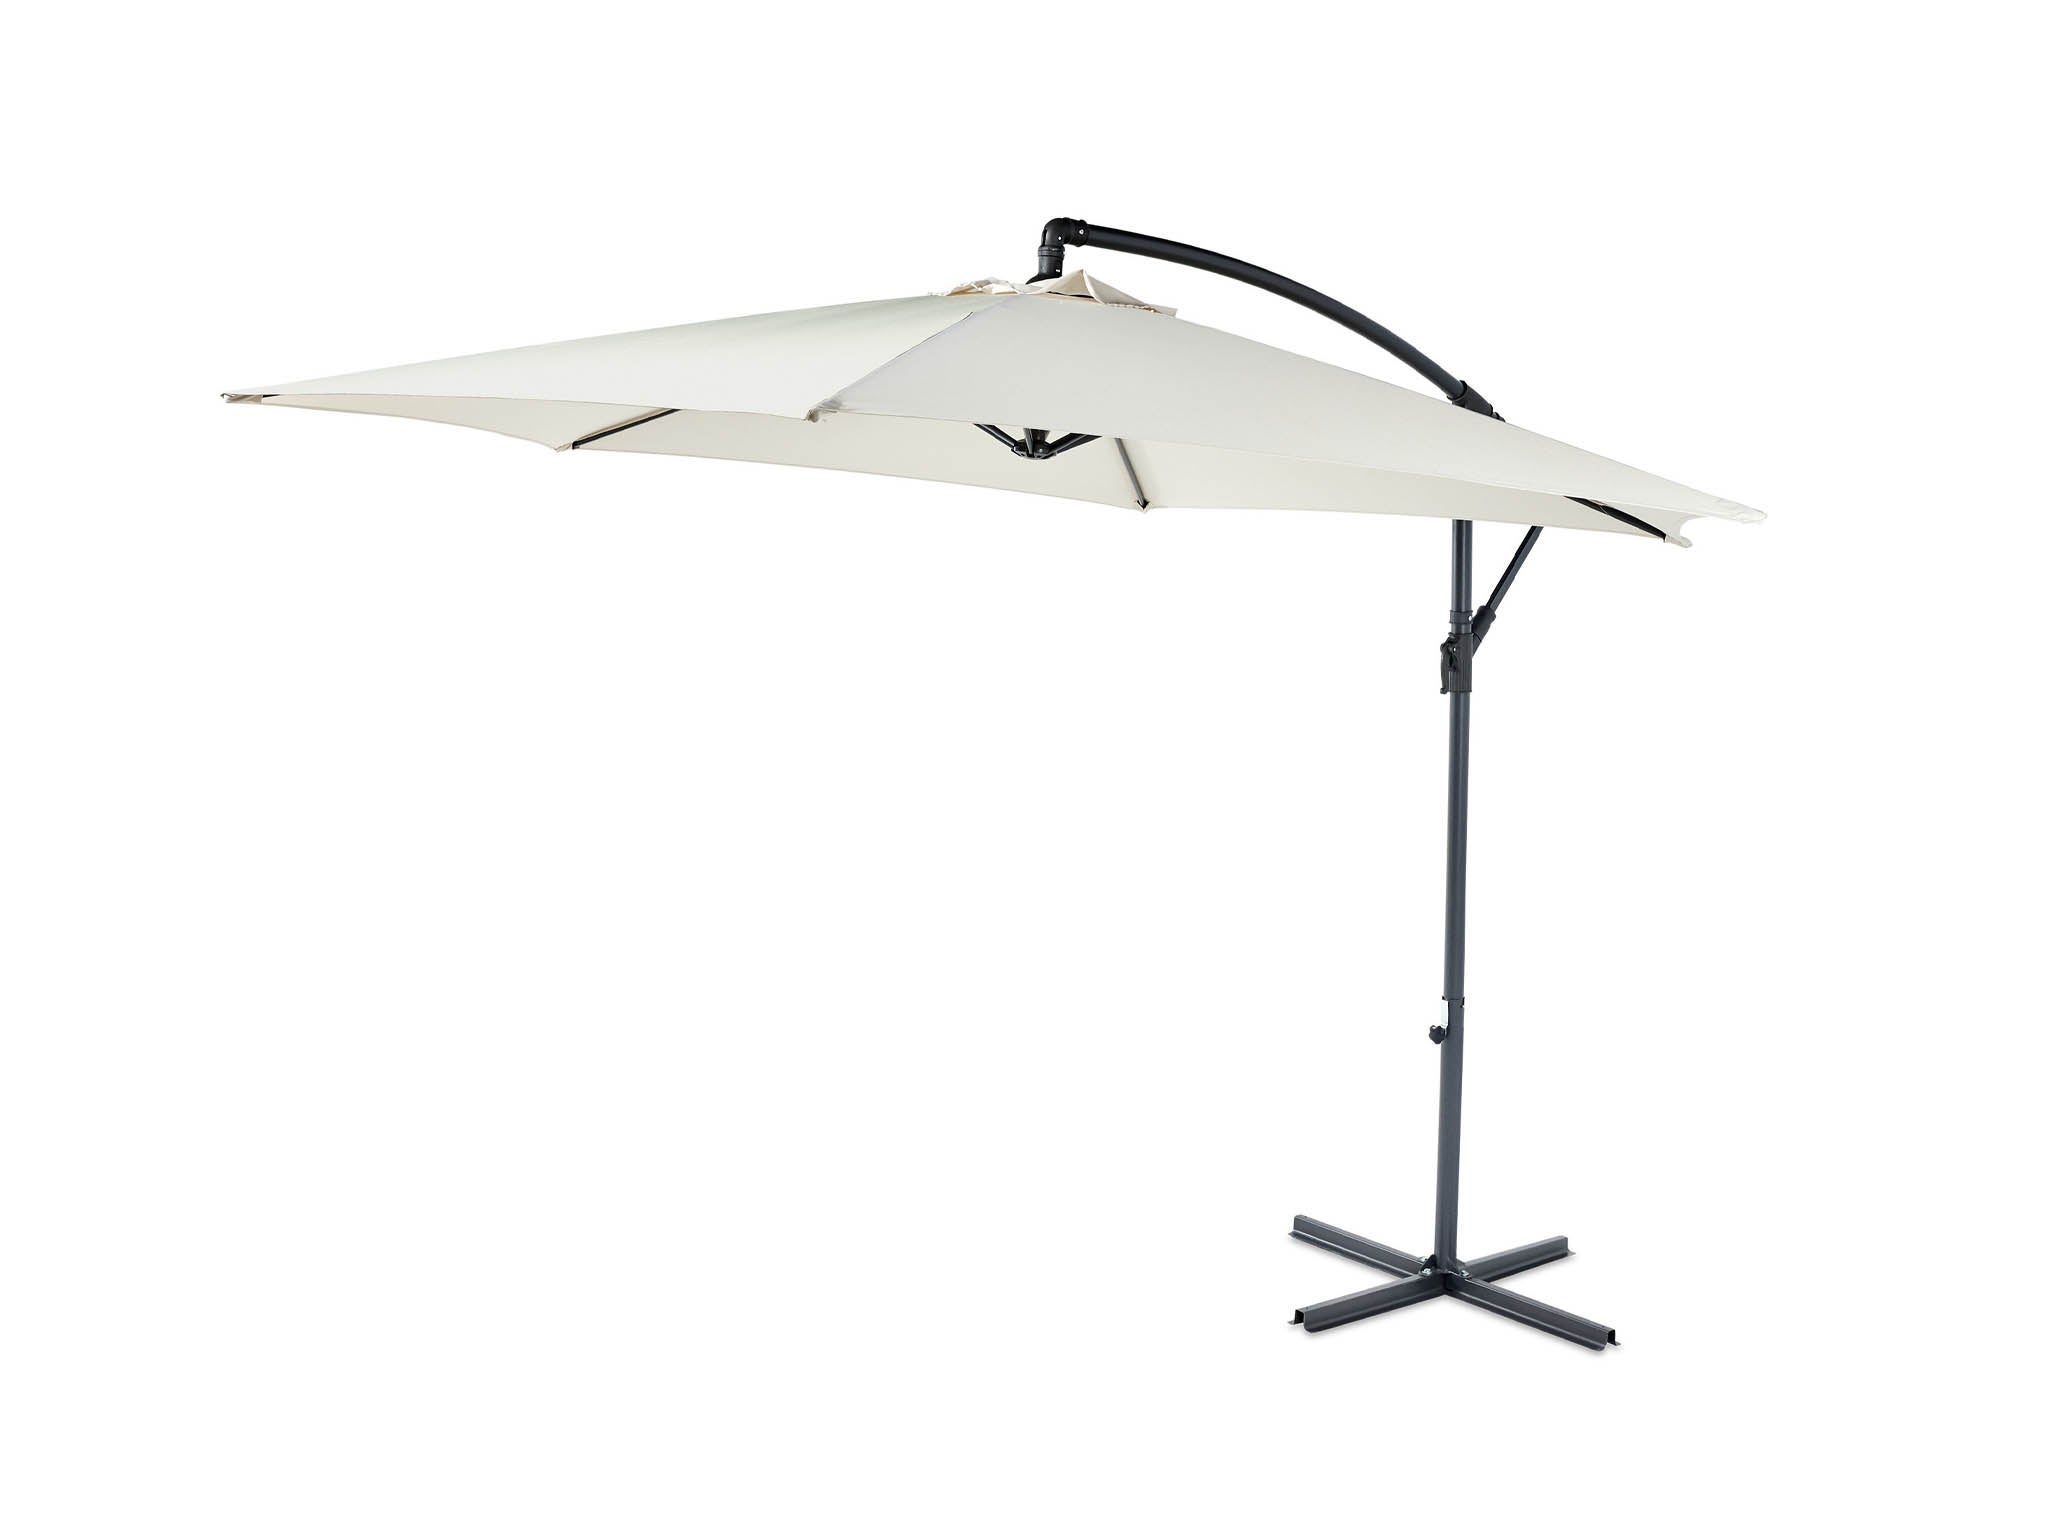 Aldi Gardenline cream cantilever parasol: £44.99, Aldi.co.uk